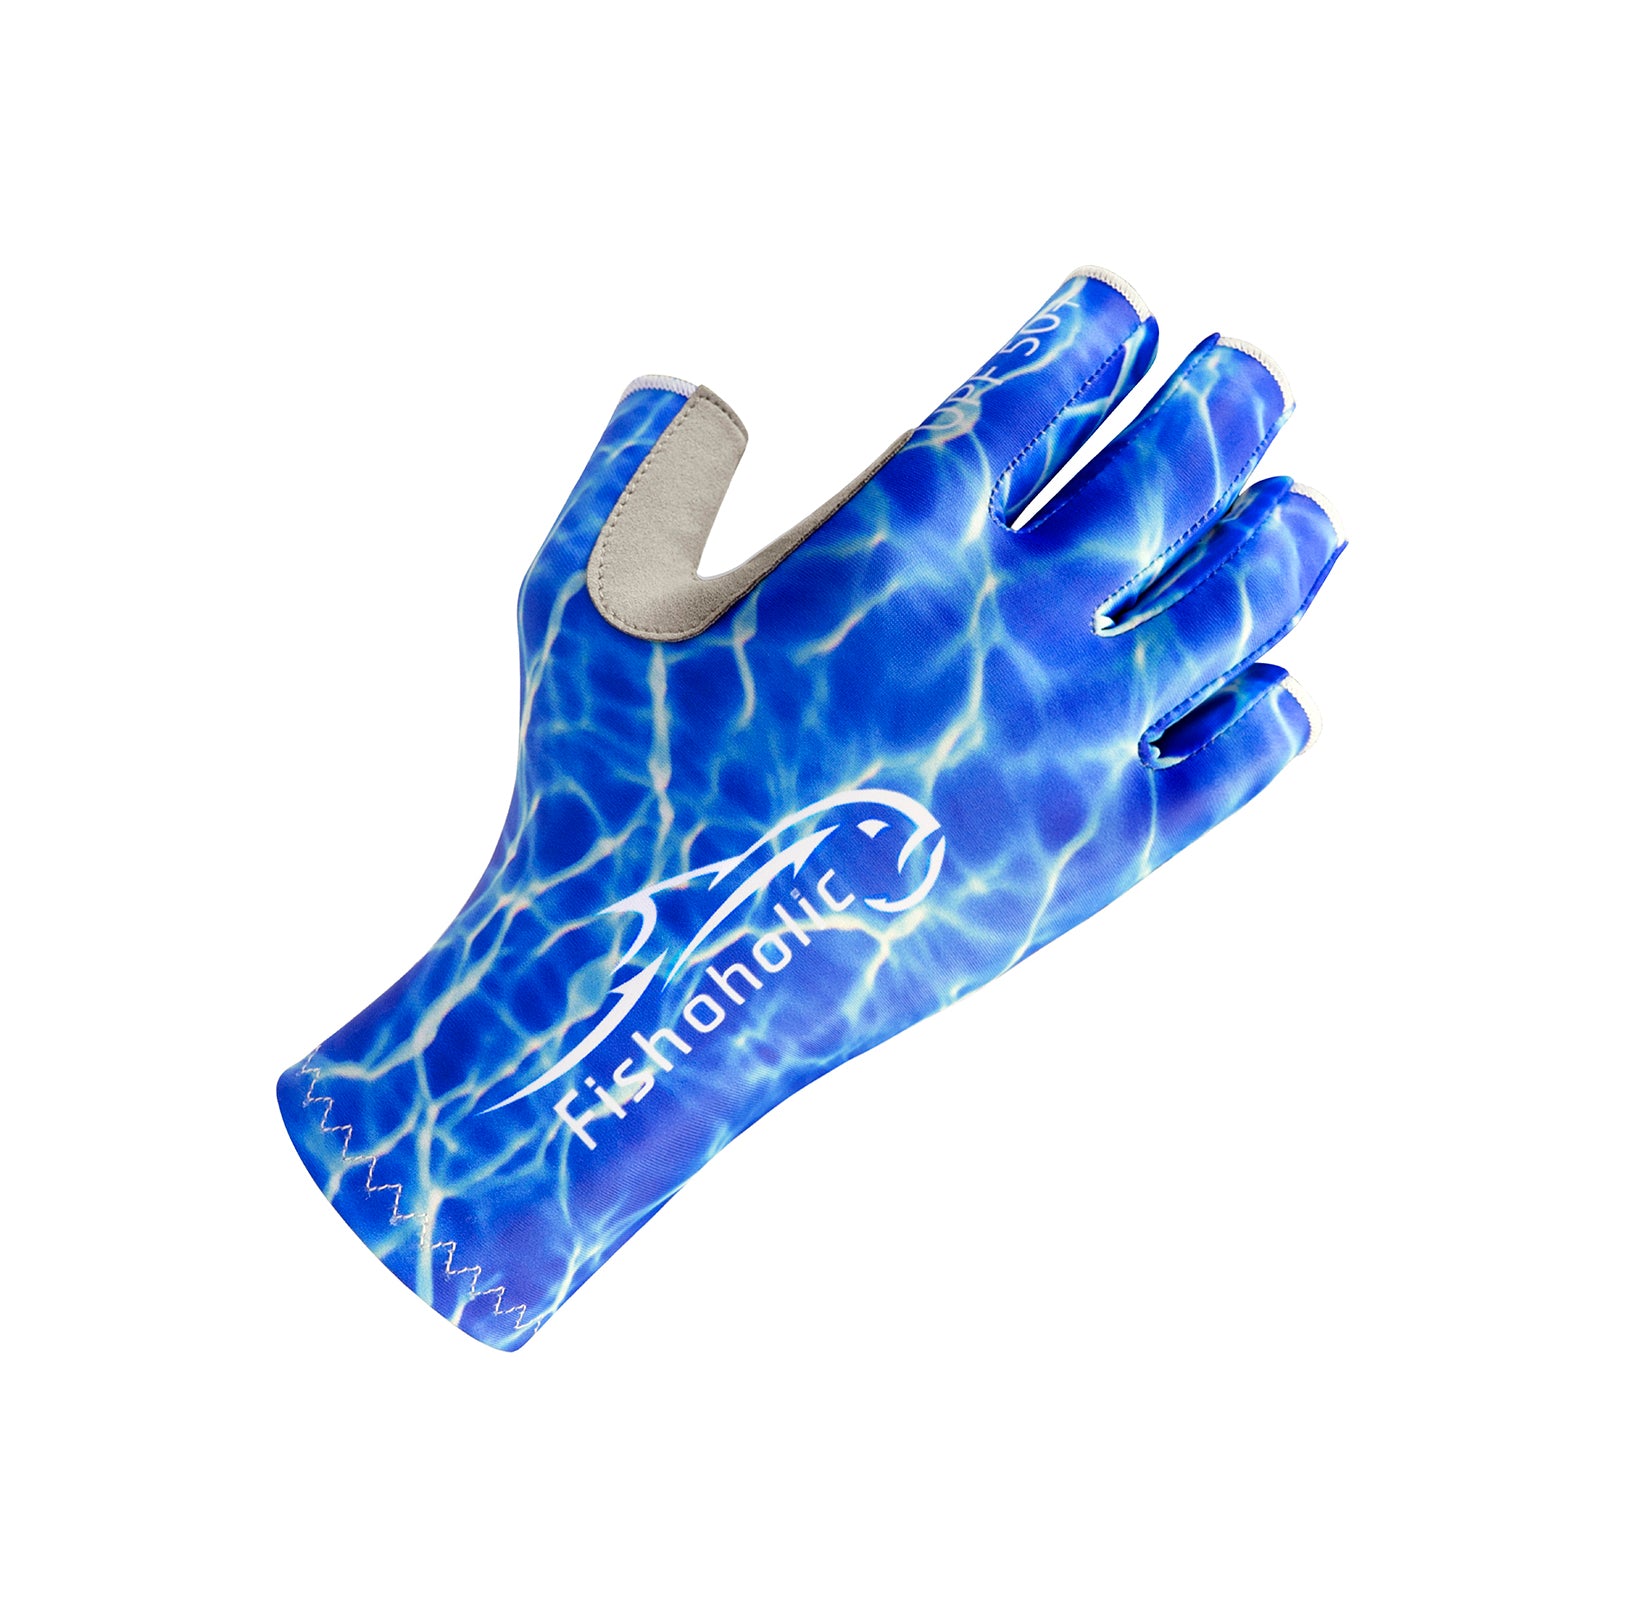 Fishoholic BLUE-l/xl Fingerless Fishing Gloves w' Super Grip - UPF50+